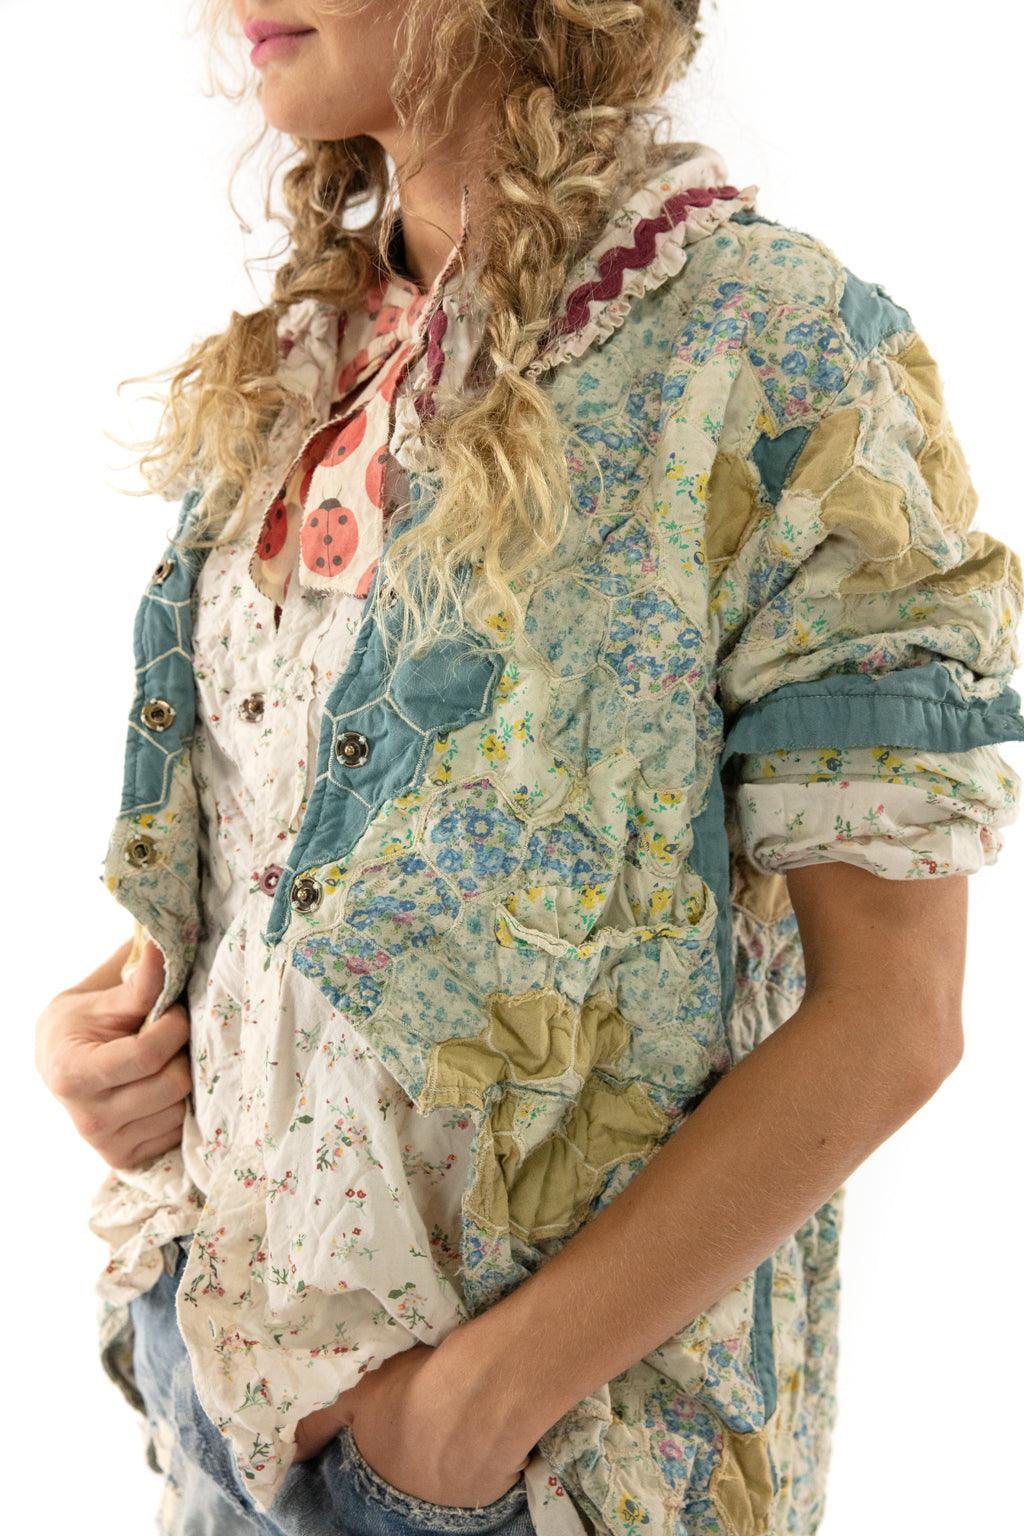 Quiltwork Emmett Jacket - Magnolia Pearl Clothing